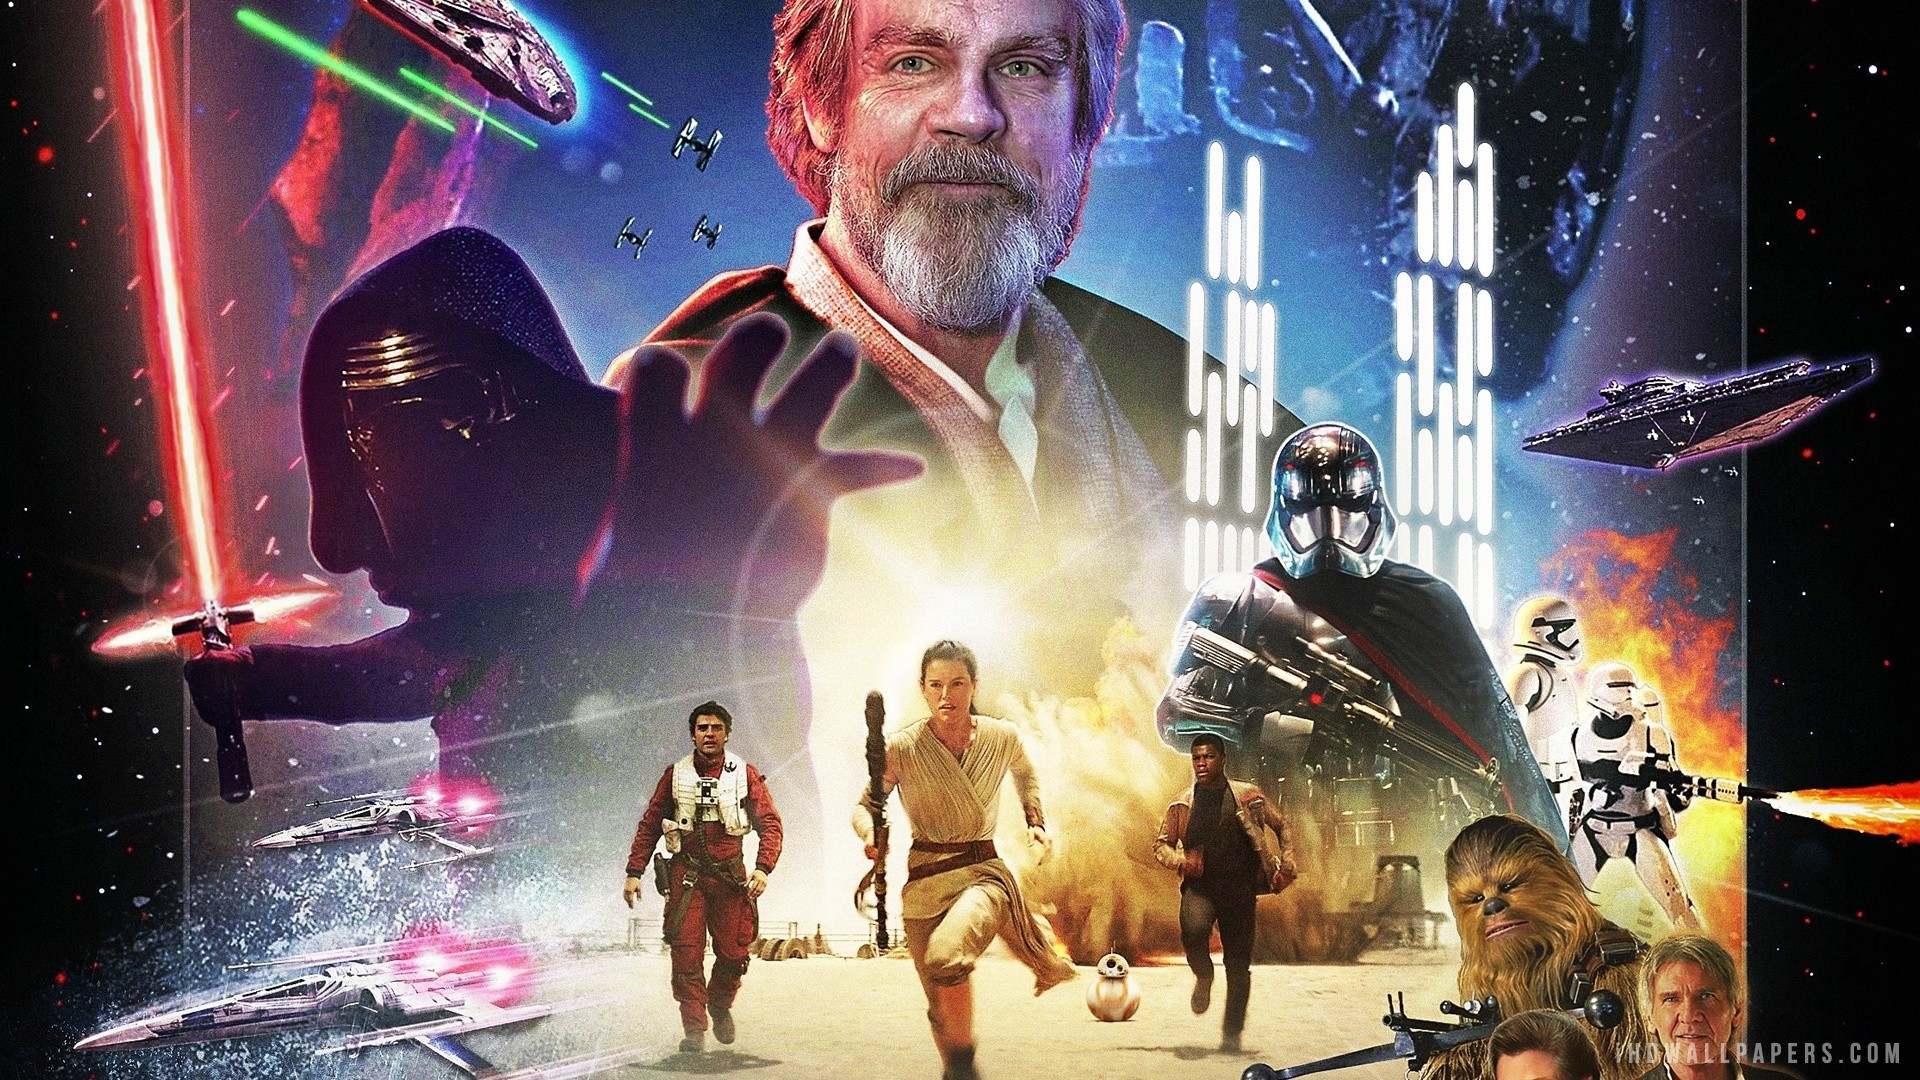 star wars the force awakens full movie watch online free